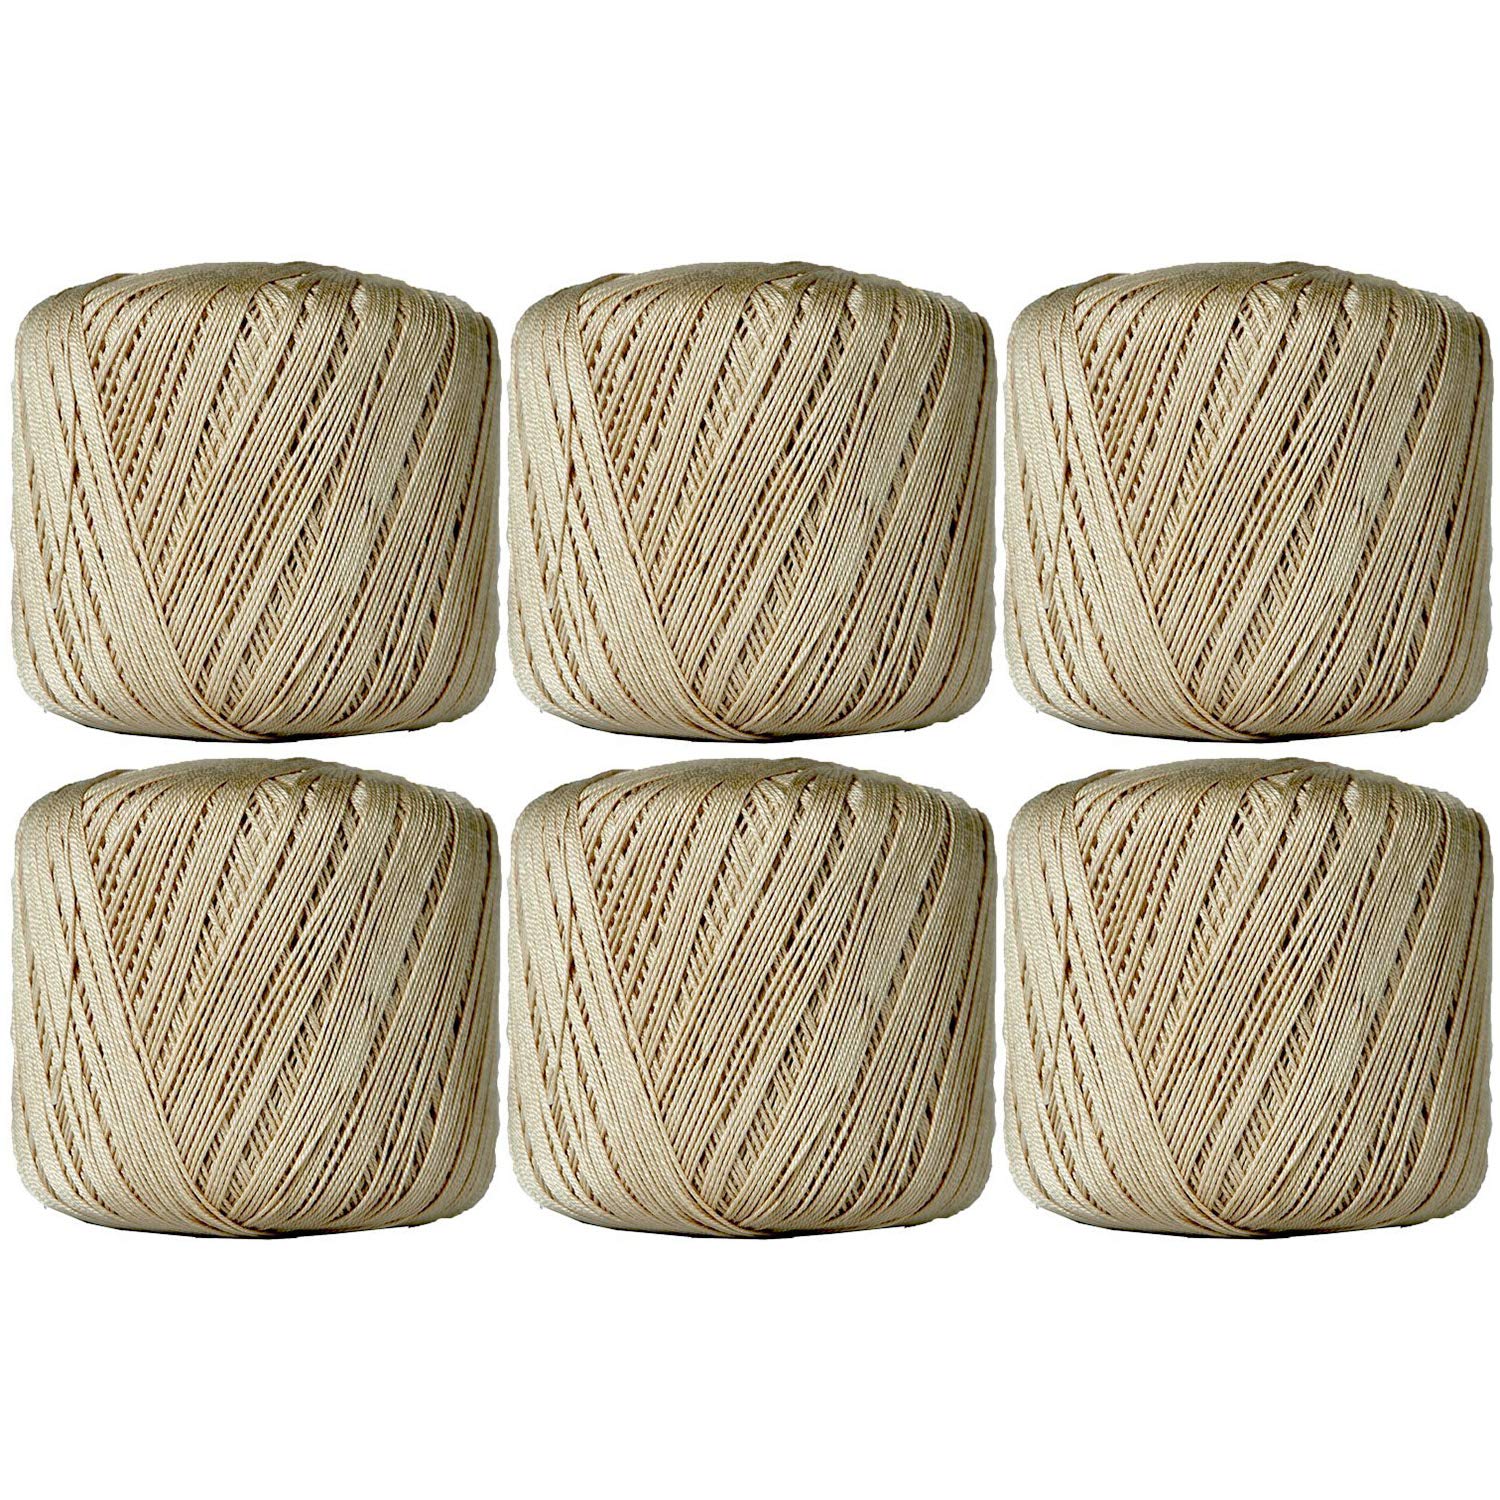 Threadart 6 Ball Pack Threadart 100 Pure Cotton Crochet Thread - Size 10 - Color 16 - Tan - Size 10 And 3 - Singles And Bulk Packs Availab